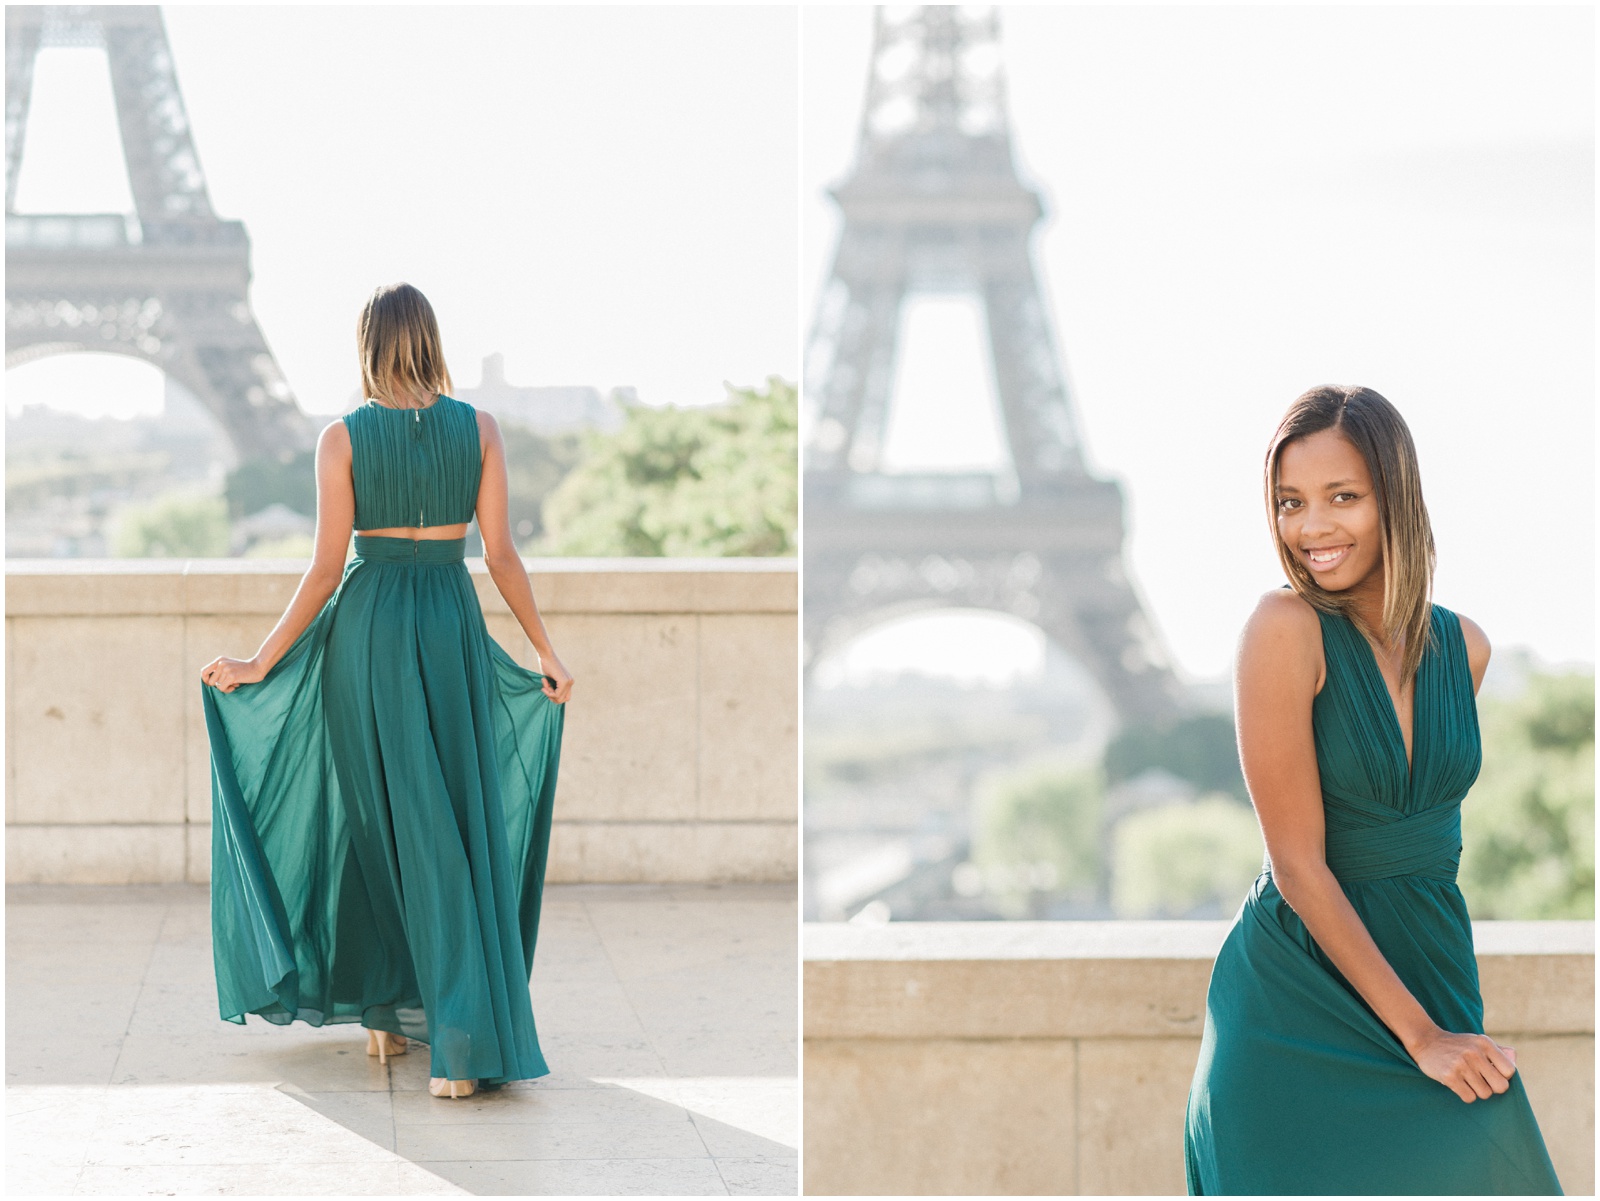 Gorgeous green dress at Eiffel Tower